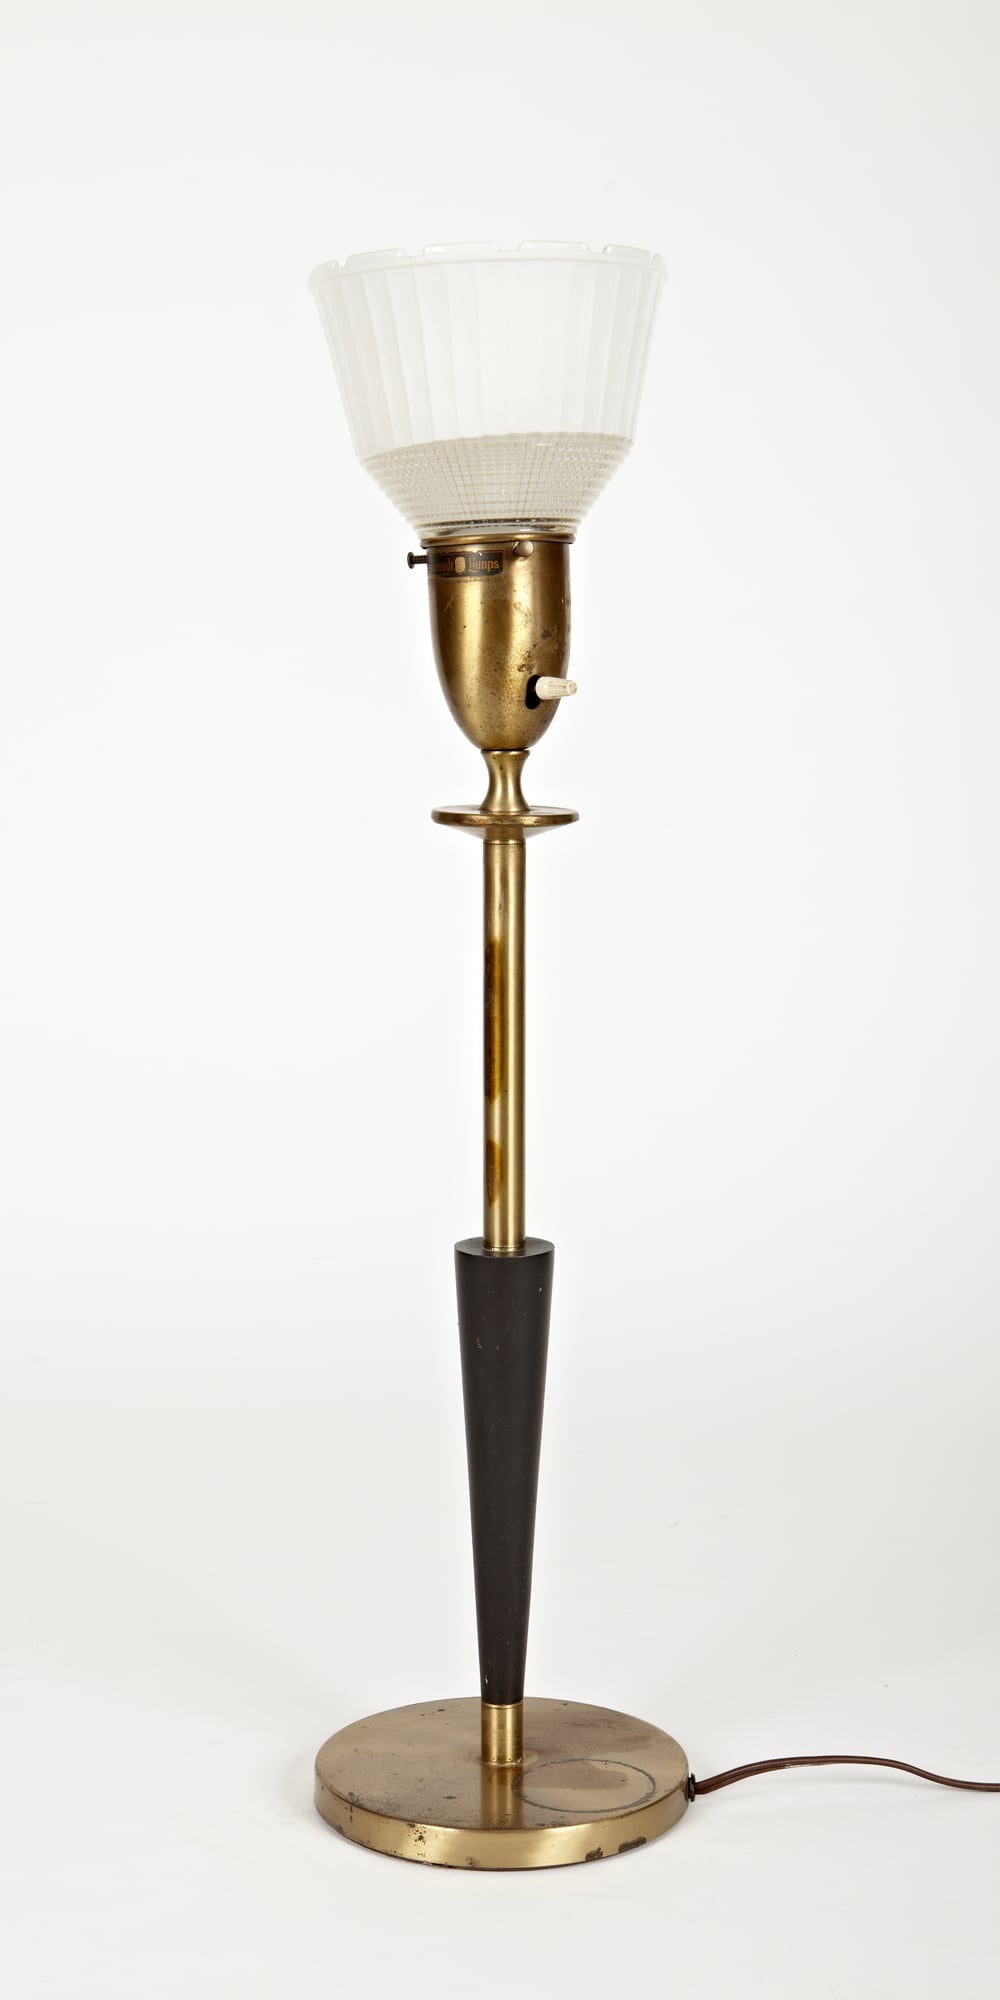 Rembrandt Brass Bakelite Lamp Raji, Rembrandt Brass Table Lamp